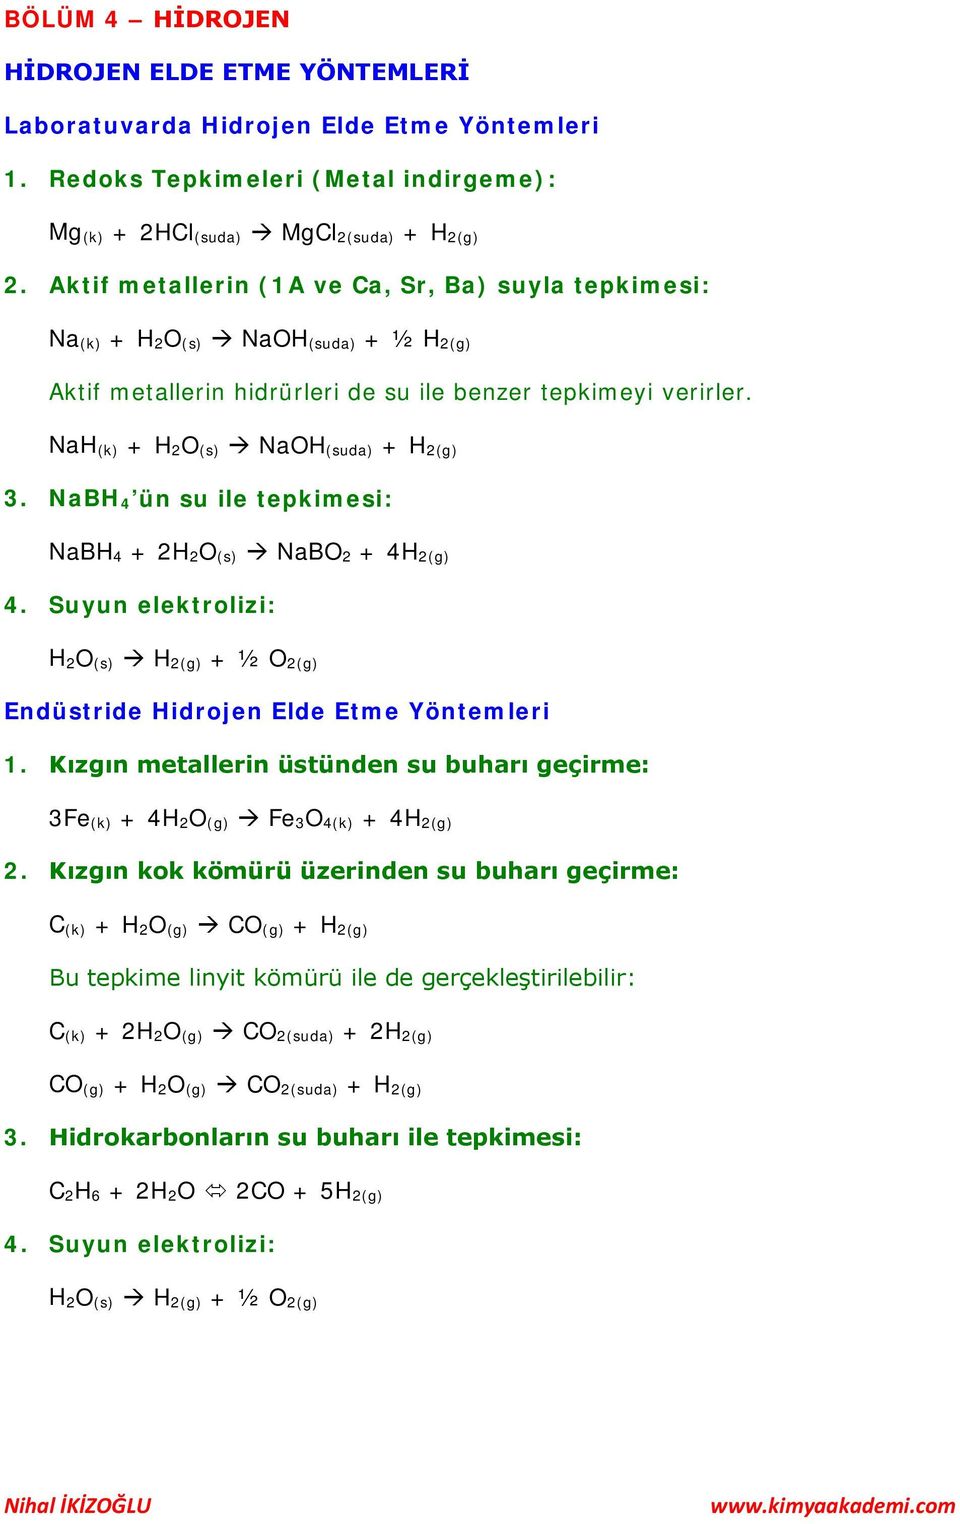 NaH (k) + H 2O (s) NaOH (suda) + H 2(g) 3. NaBH 4 ün su ile tepkimesi: NaBH 4 + 2H 2O (s) NaBO 2 + 4H 2(g) 4. Suyun elektrolizi: H 2O (s) H 2(g) + ½ O 2(g) Endüstride Hidrojen Elde Etme Yöntemleri 1.